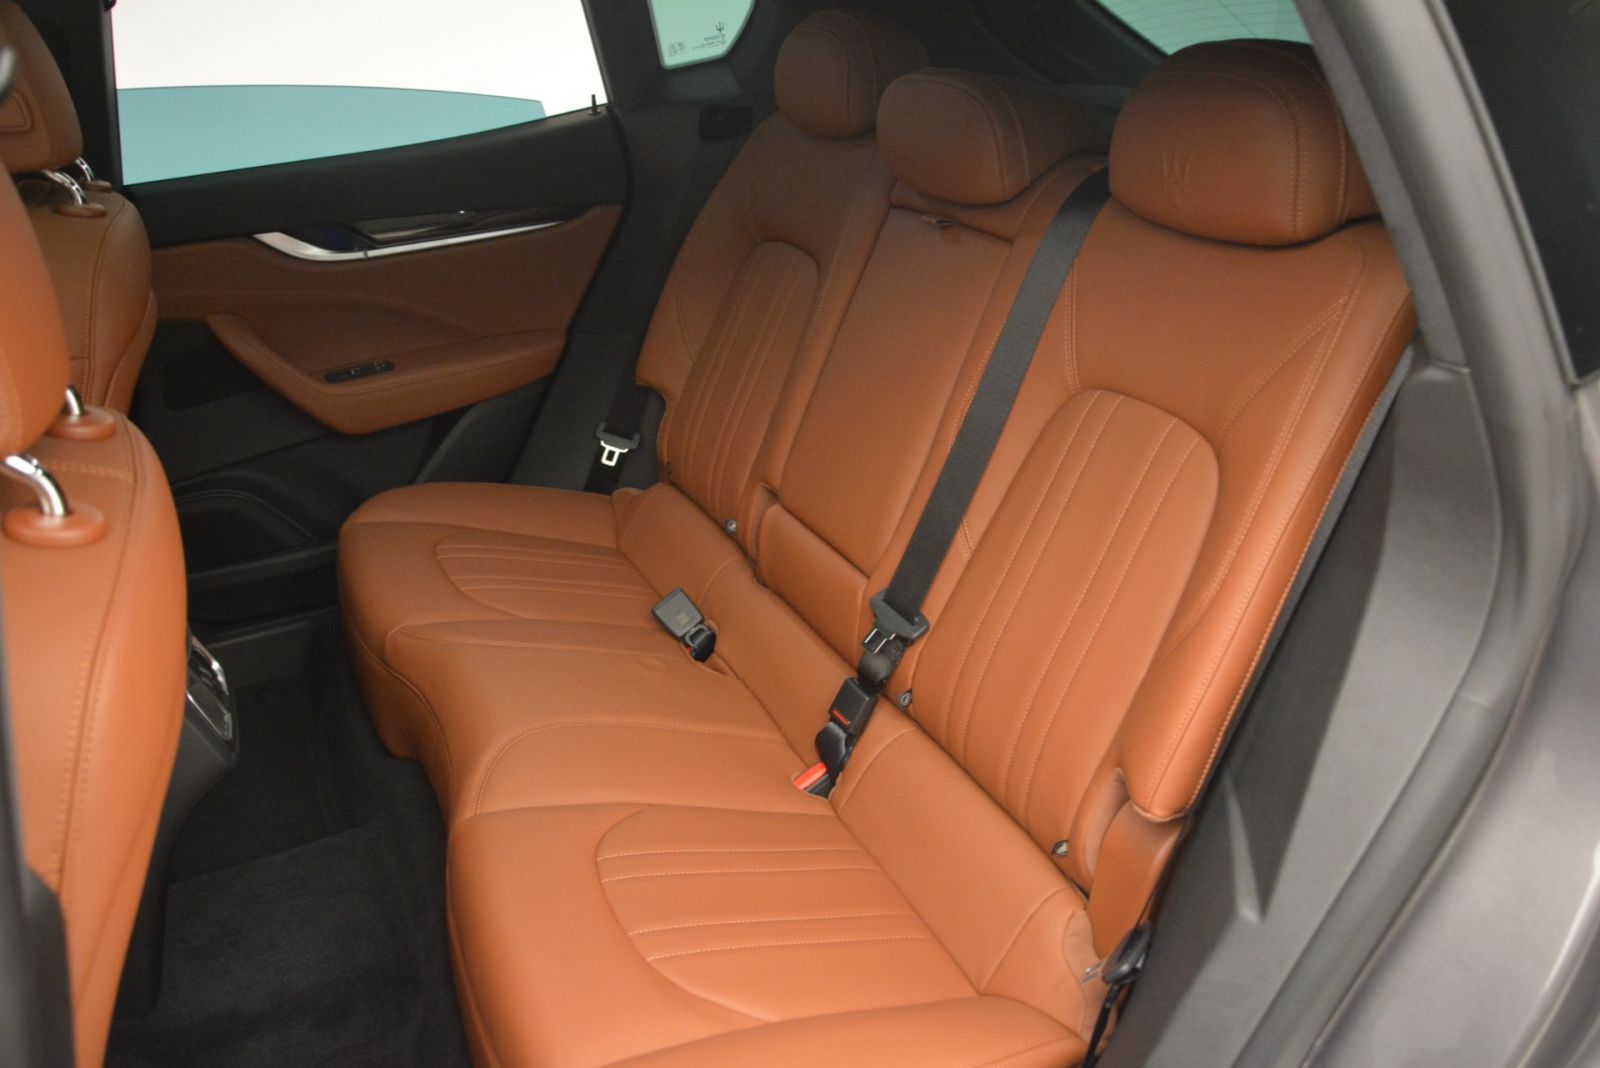 Maserati Levante 5 Chỗ Đối Thủ Porsche Cayenne 2020 Giá Bao Nhiêu - ghế da bò nâu vàng hàng ghế thứ 2